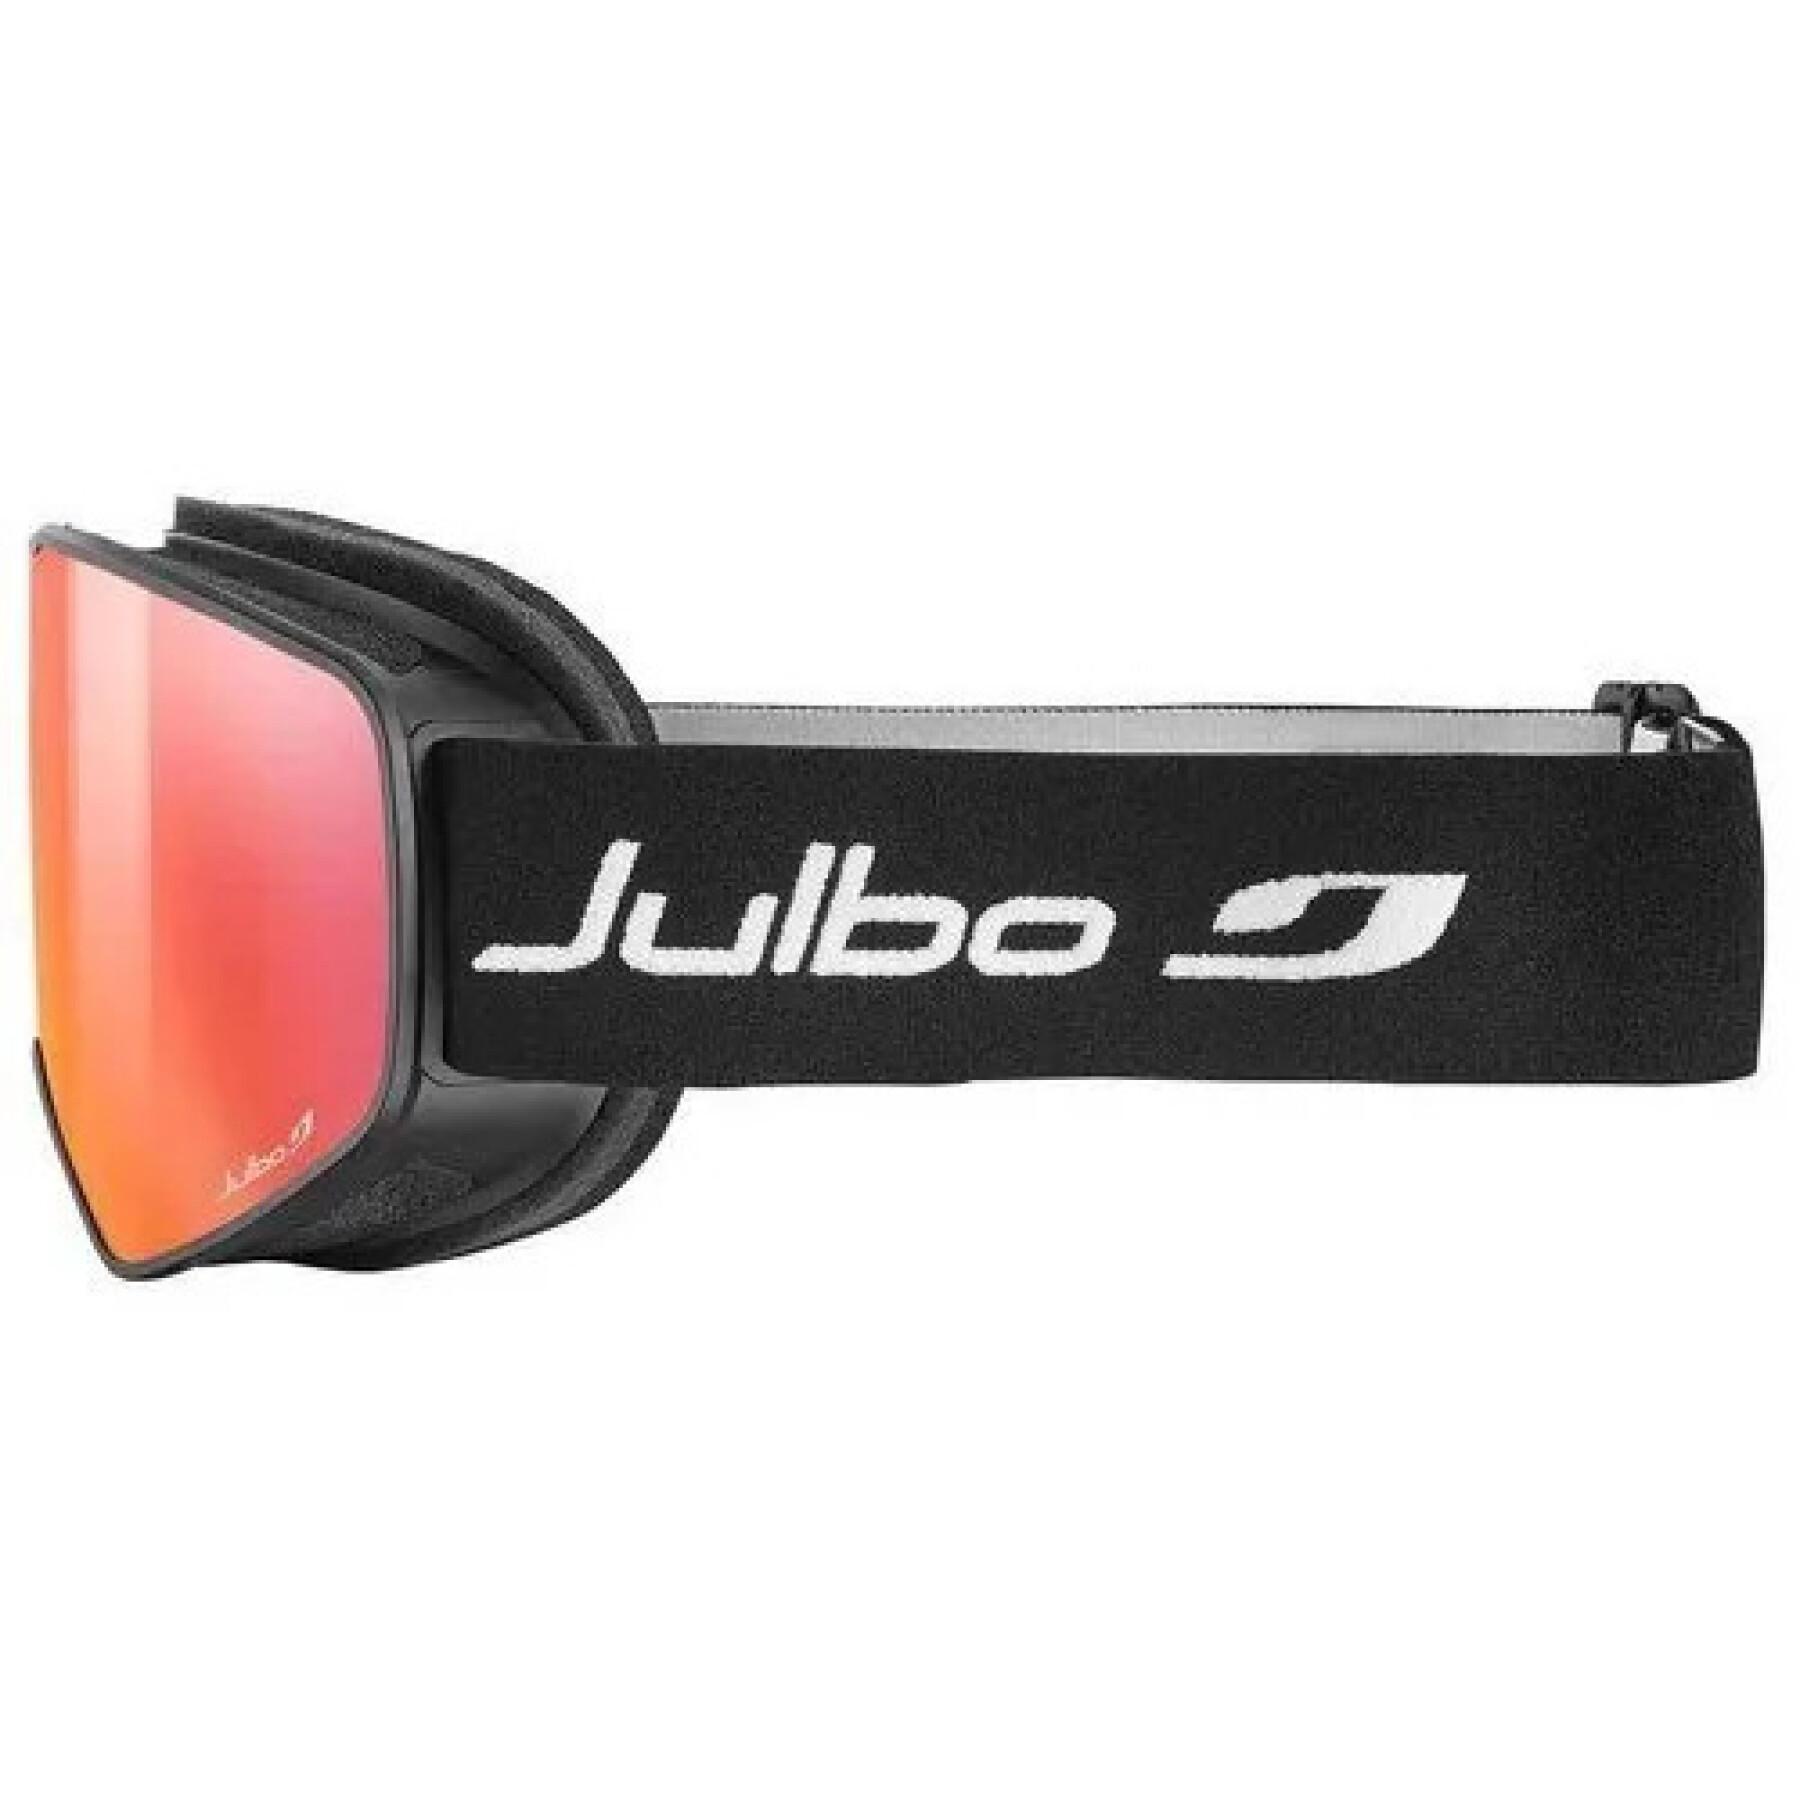 Masque de ski femme Julbo Pulse GC CAT3 - Masques de Ski - Accessoires -  Sports Hiver